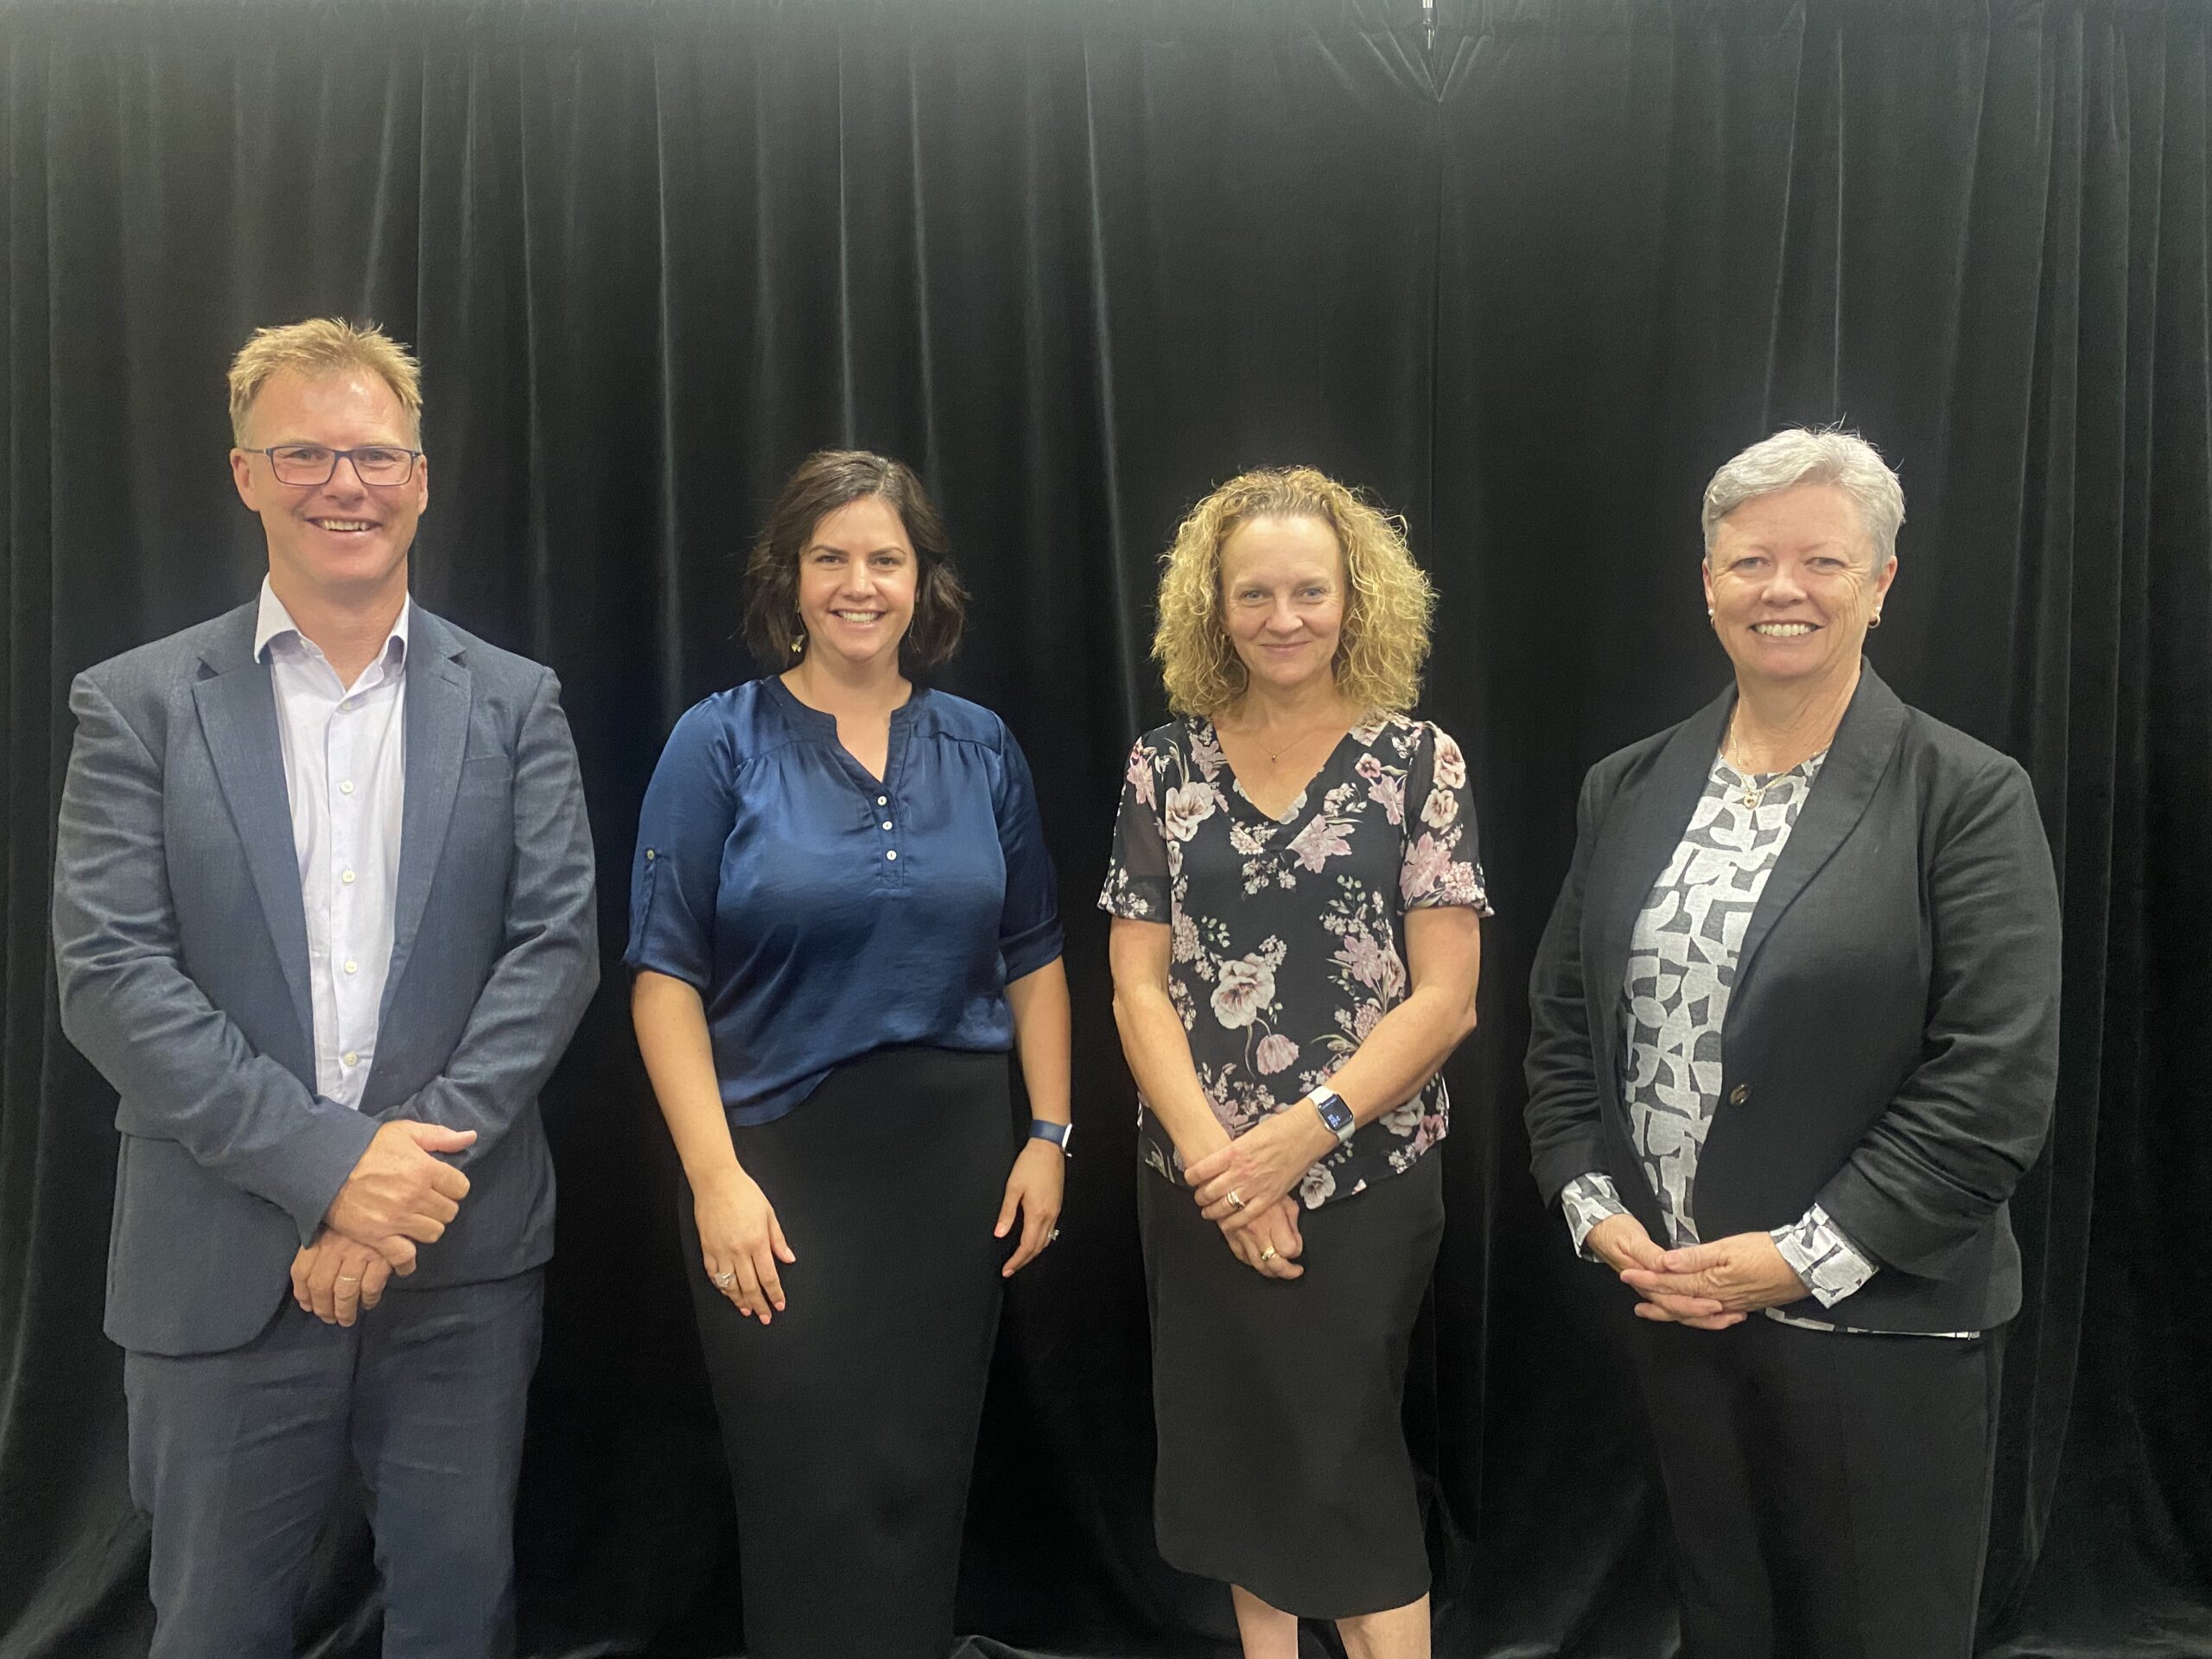 From left to right: Darren Mathewson, Li-Ve Tasmania CEO, Jan O’Keefe, genU Board member, Clare Amies, genU CEO, Leanne Meehan, genU Board member